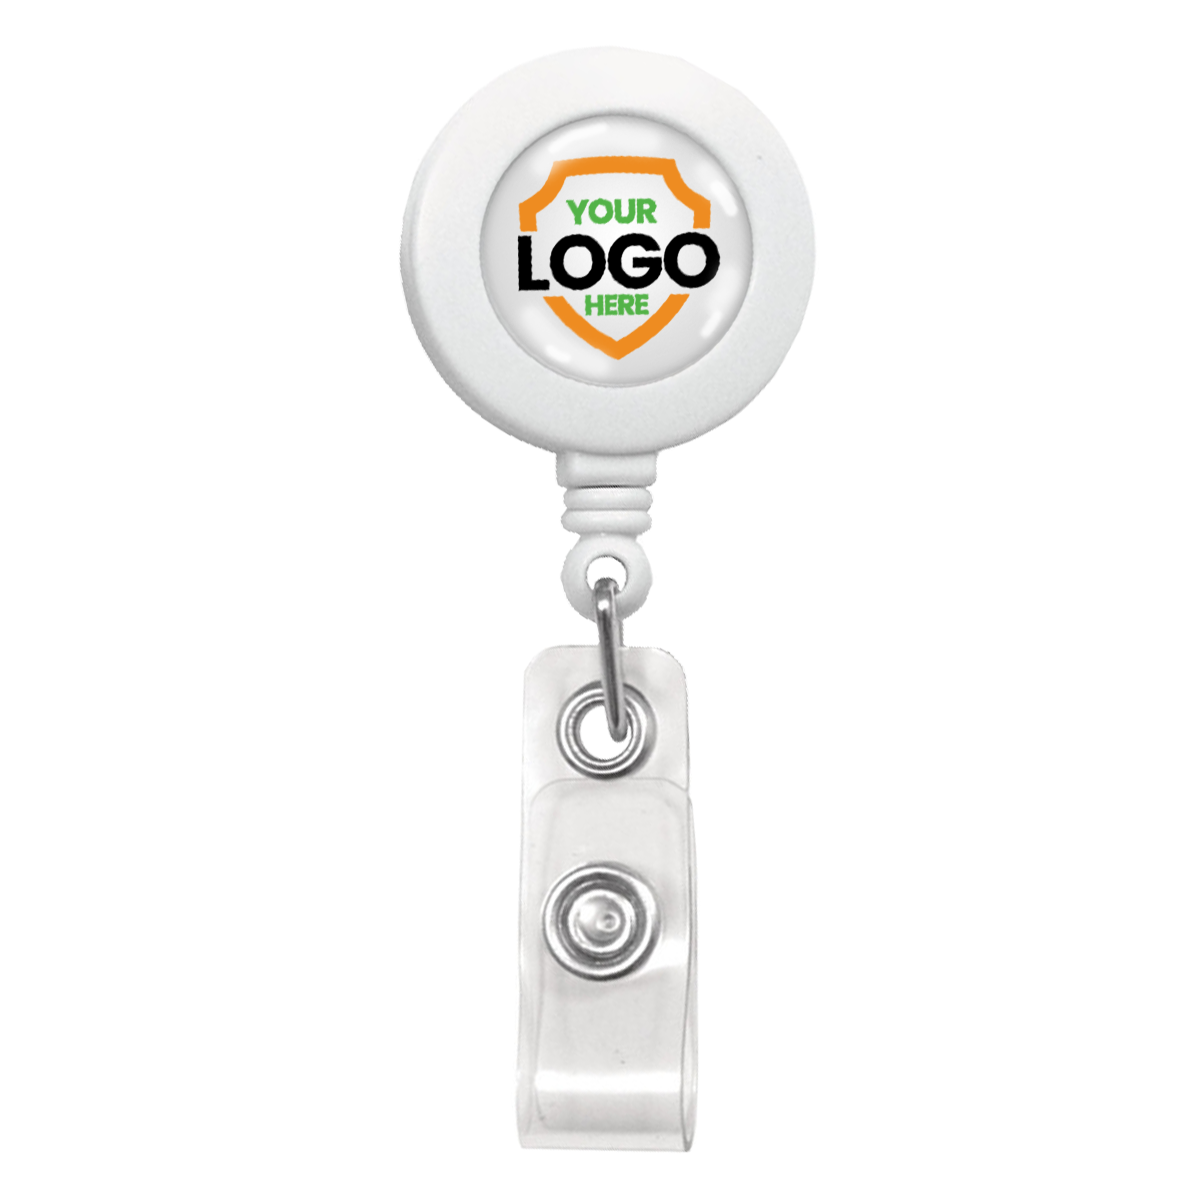 customizable badge reels - standard retractable custom badge reels for business branding 2120-3038 white